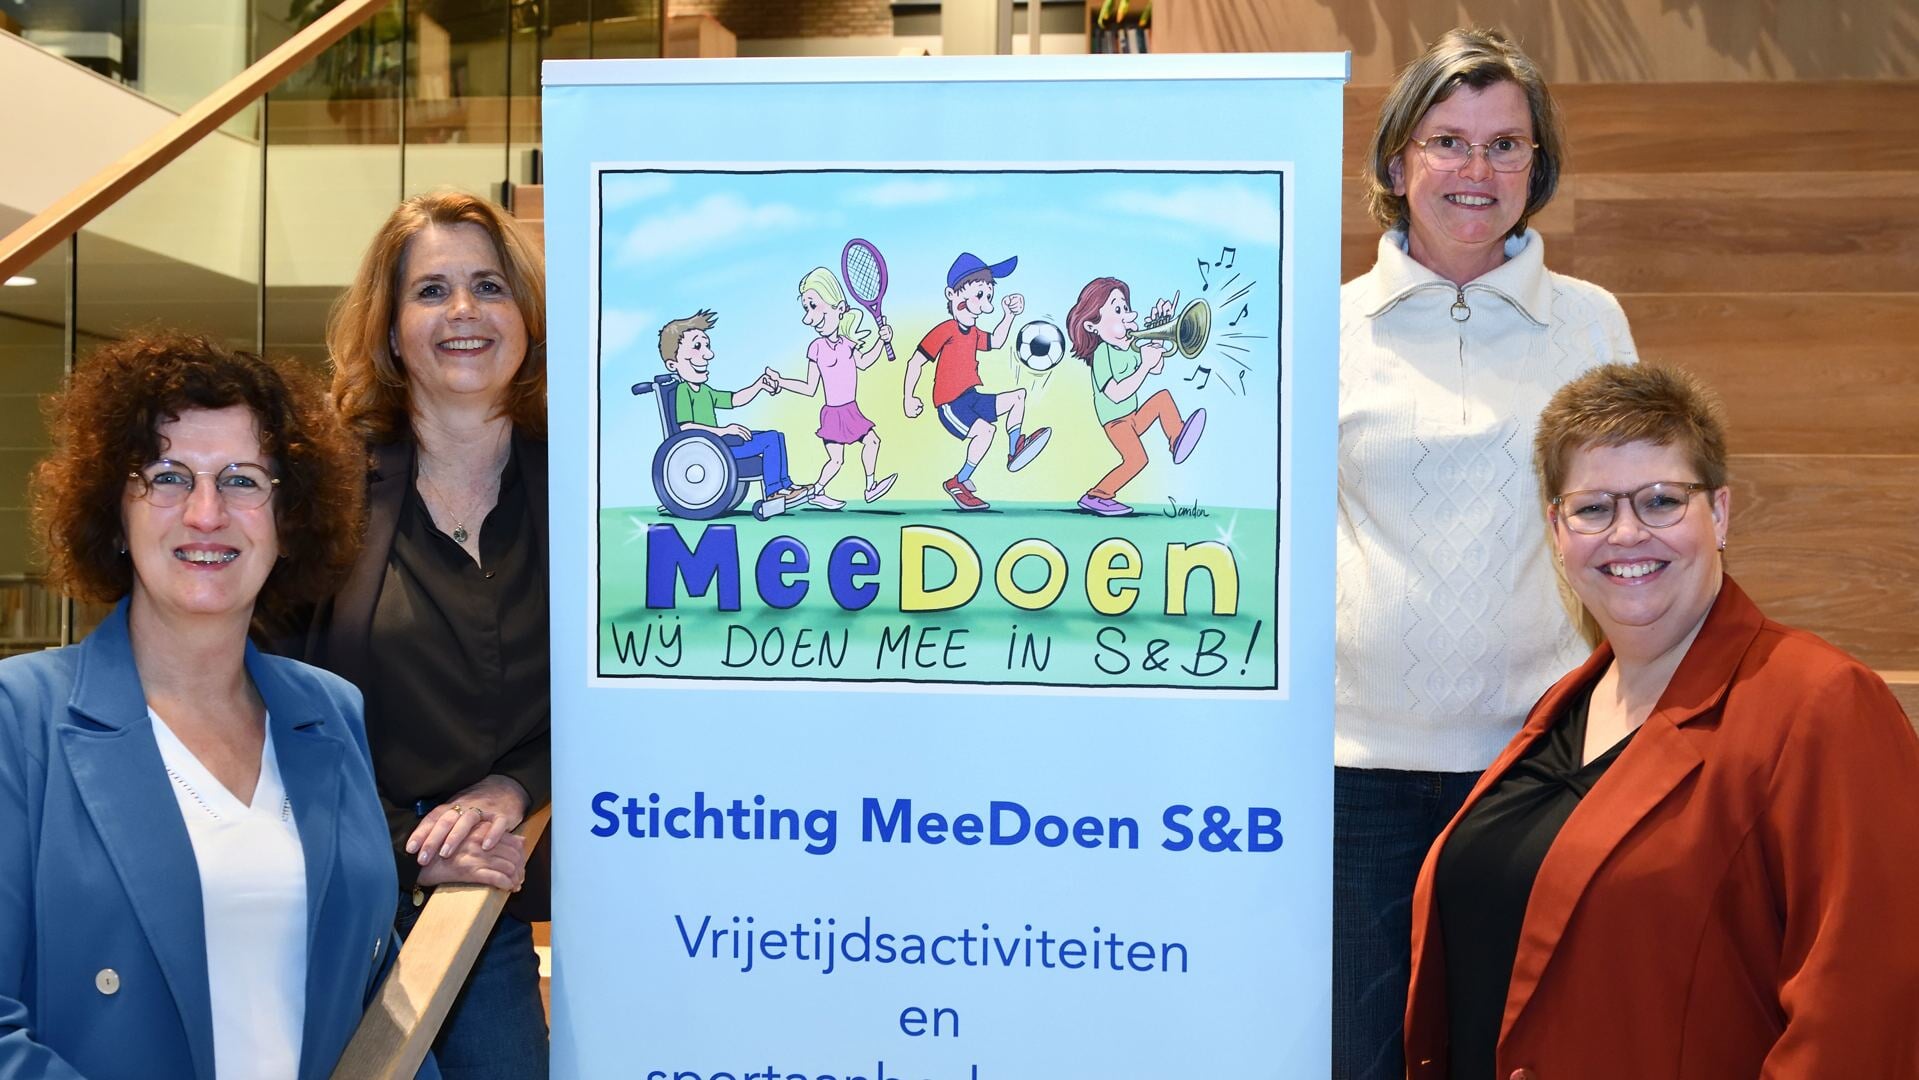 v.l.n.r.: Diana van der Looij, Maaike van Kempen, Angelique Hubers en Chantal Goossens